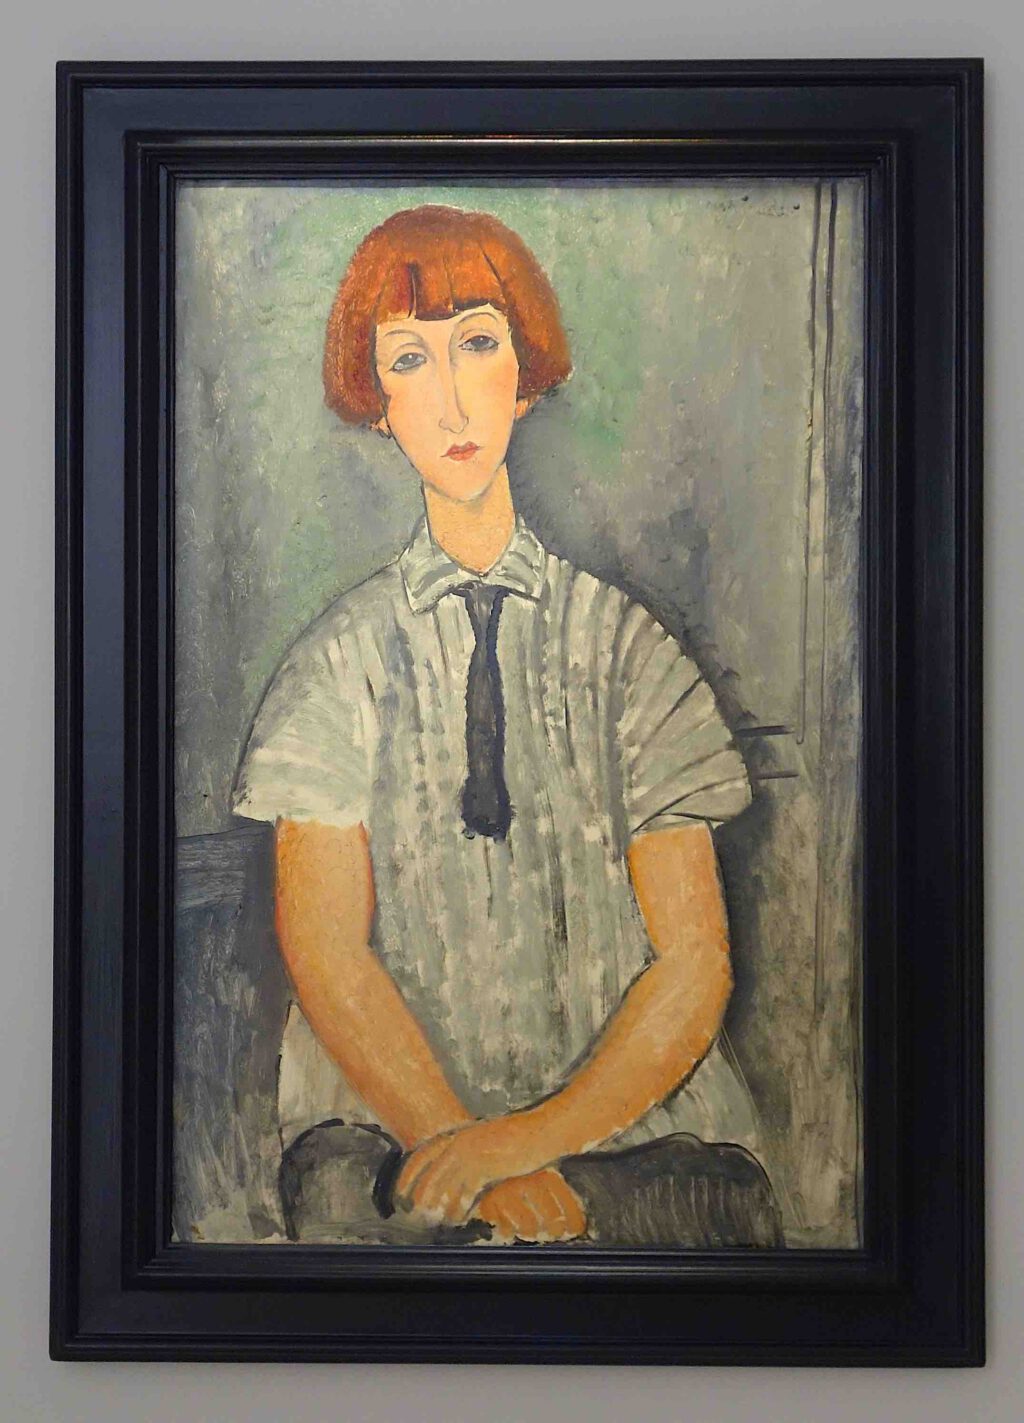 Amedeo Modigliani Jeune fille à la chemise rayée 1917. Oil on canvas, 92 x 60 cm @ Helly Nahmad gallery